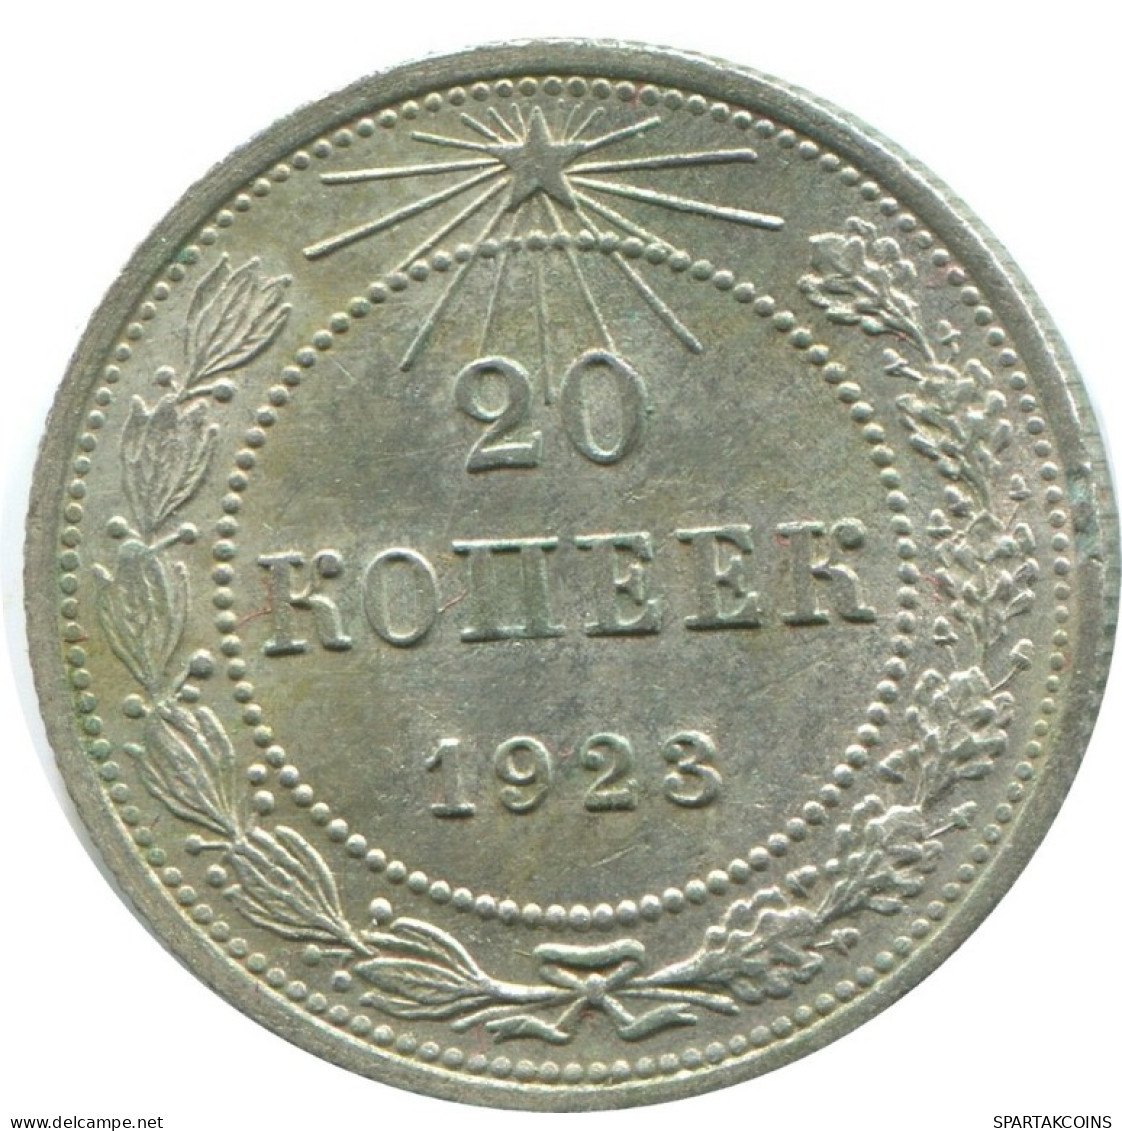 20 KOPEKS 1923 RUSSLAND RUSSIA RSFSR SILBER Münze HIGH GRADE #AF605.D.A - Russland